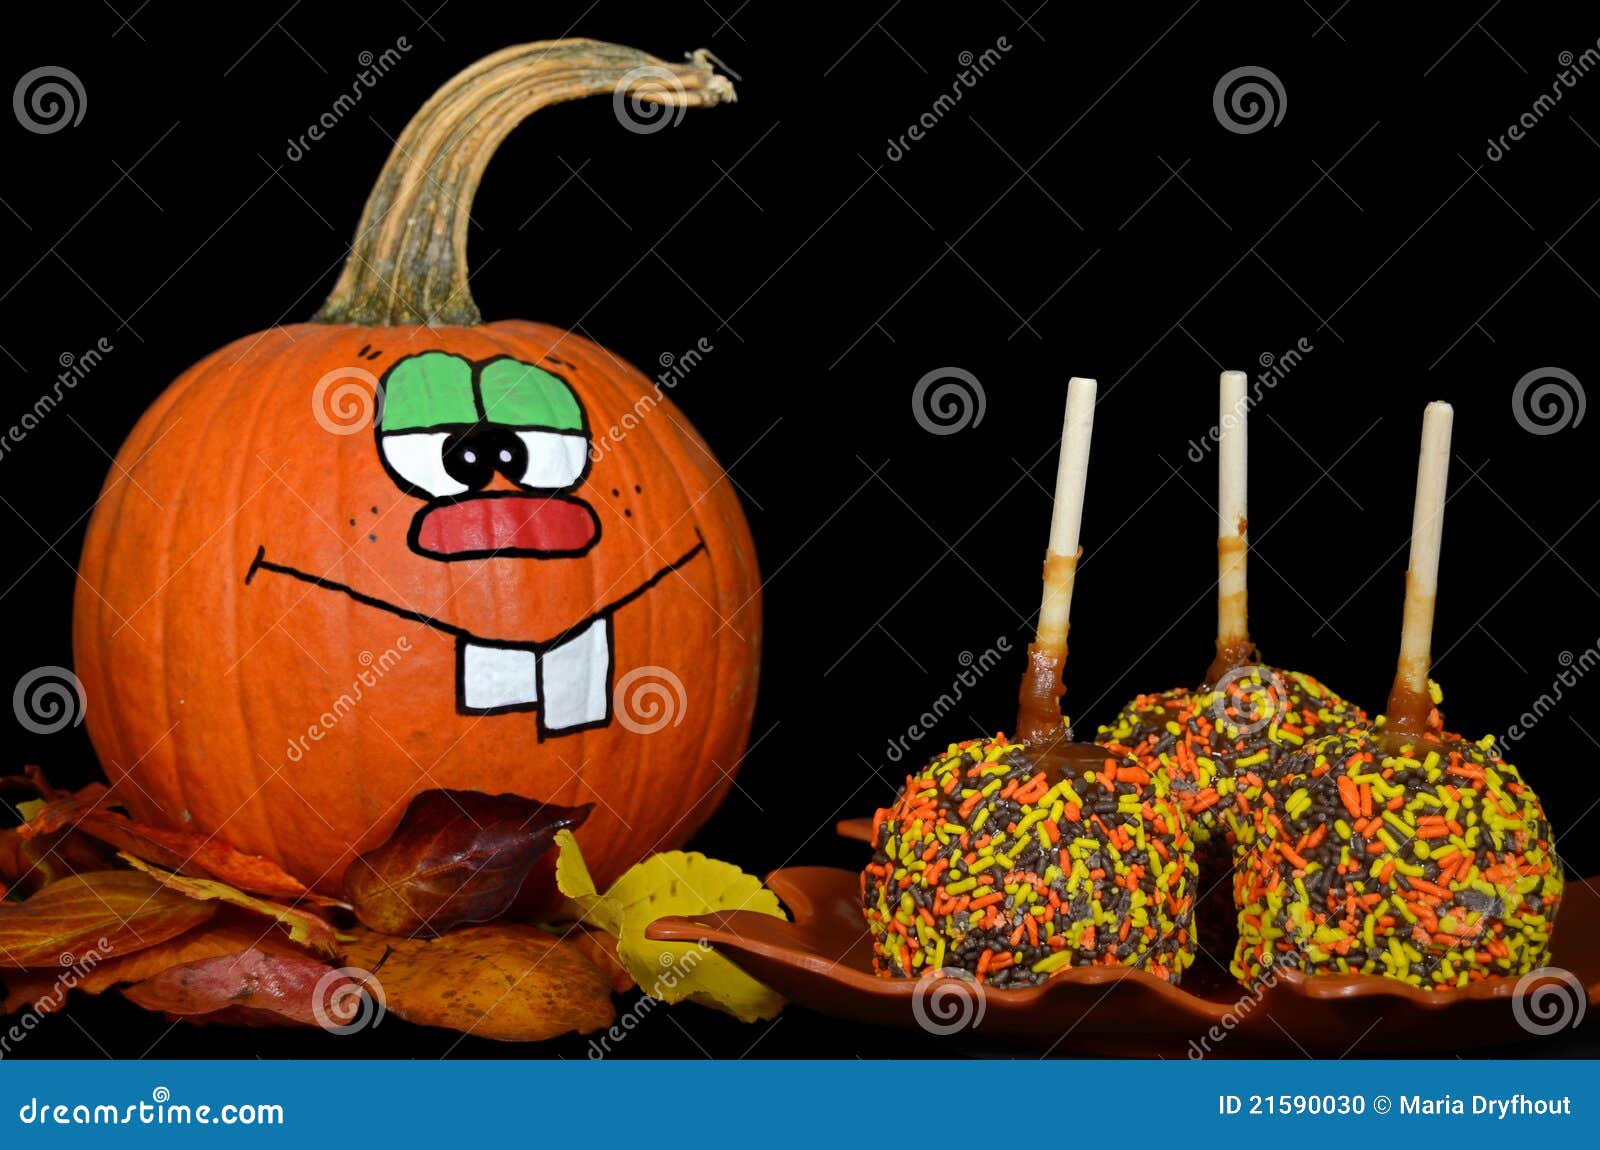 Pumpkin with caramel apple stock photo. Image of humor - 21590030